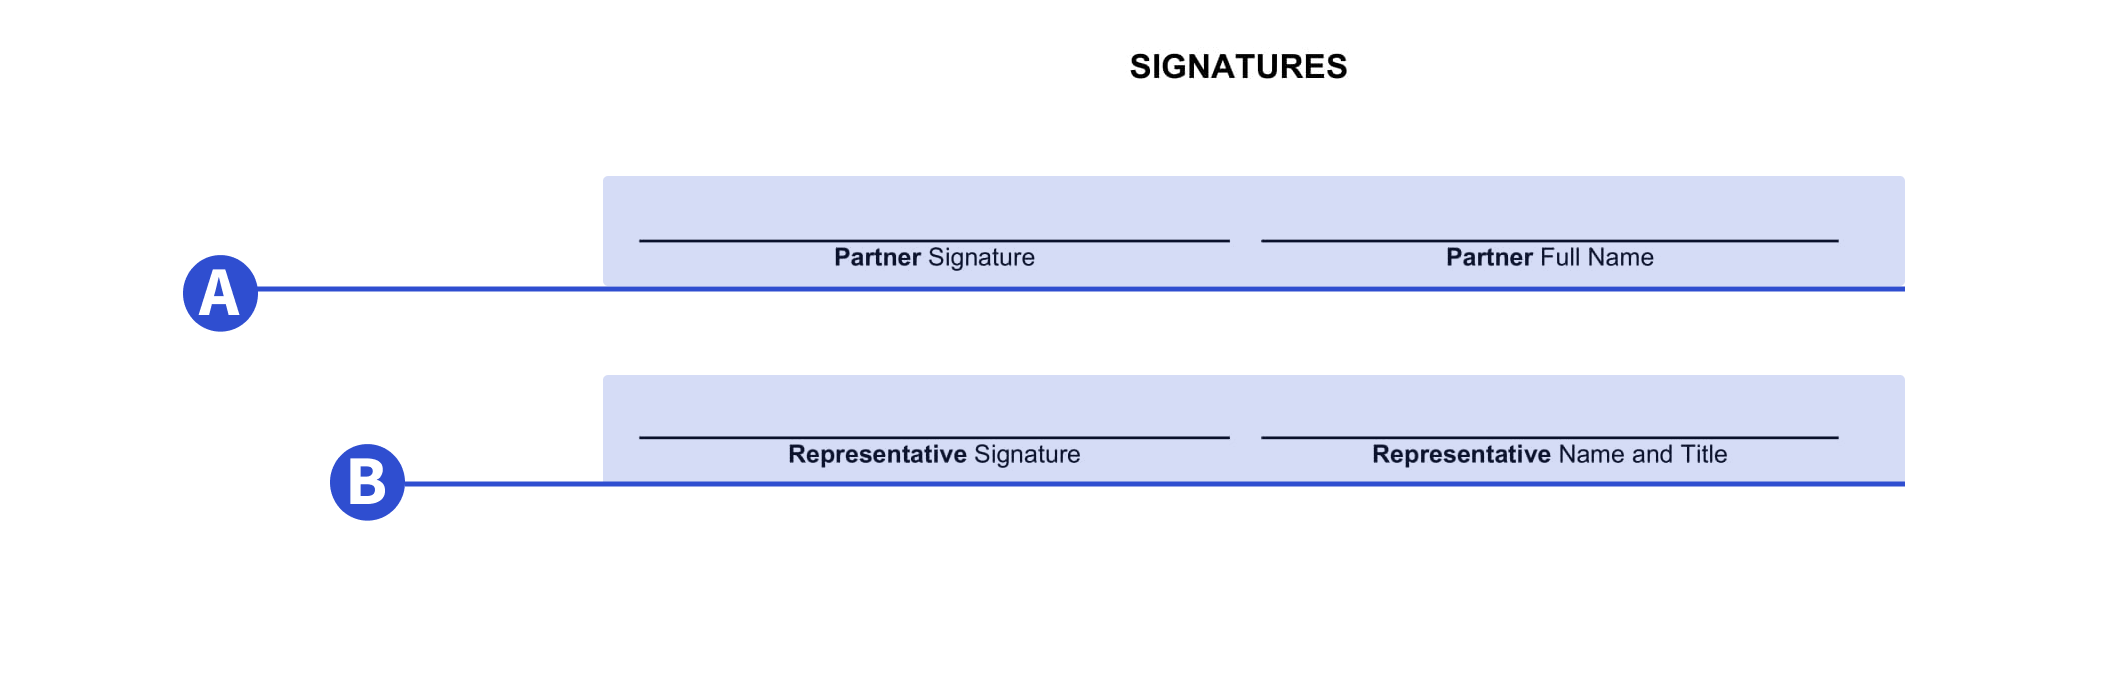 partnership agreement signatures